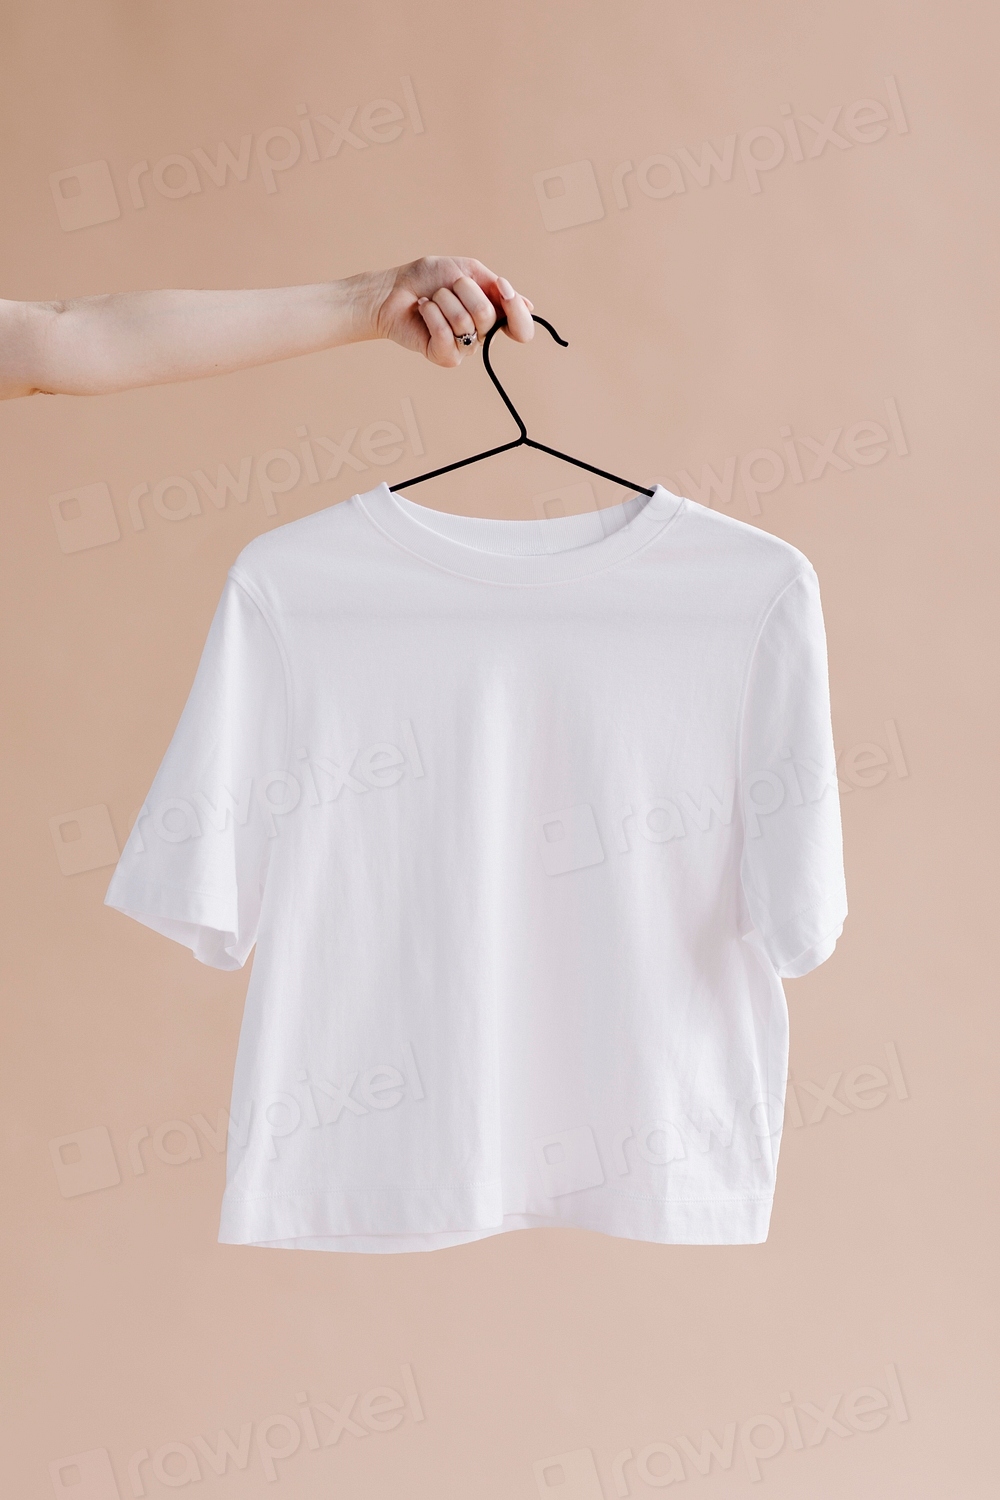 White shirt hanger mockup | Premium PSD Mockup - rawpixel